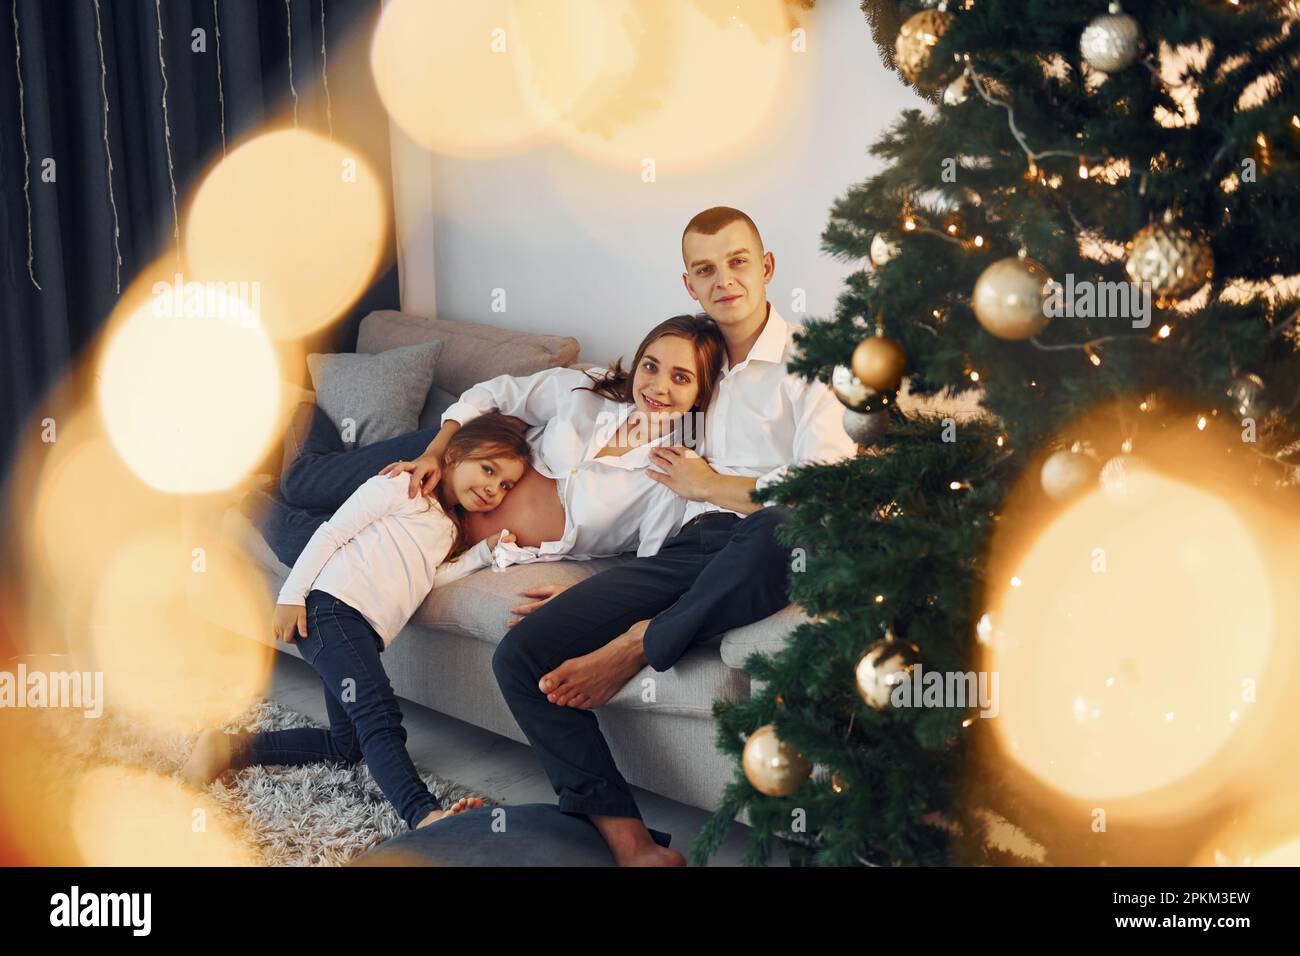 With Christmas tree. Happy family celebrating holidays indoors together. Stock Photo